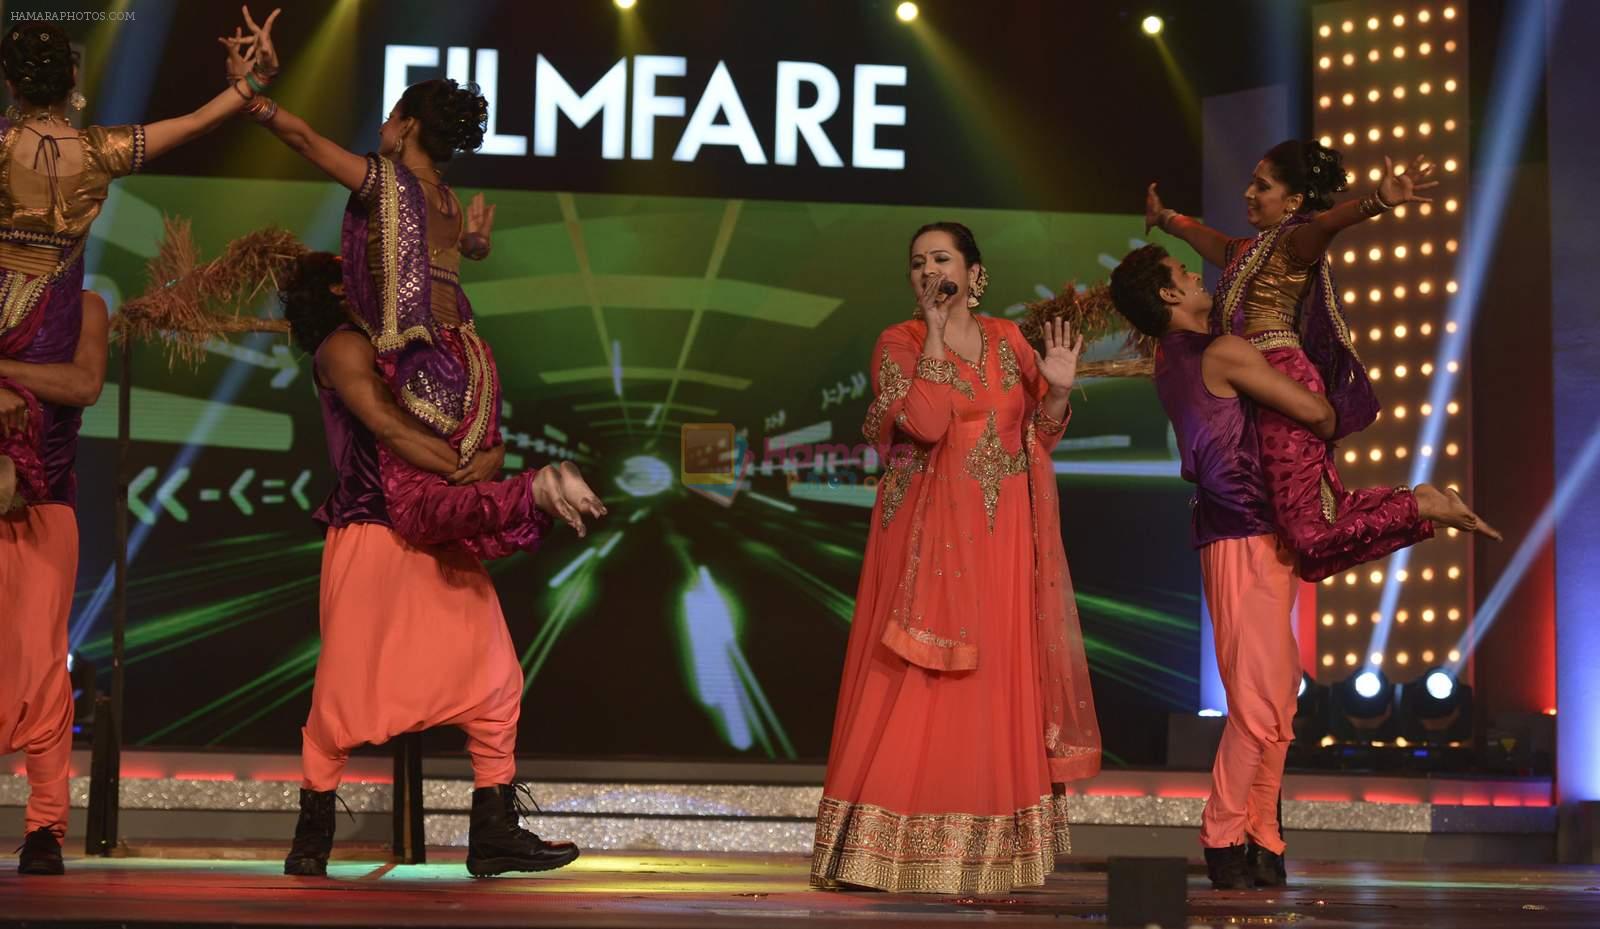 Vaishali Sawant performs during the Ajeenkya DY Patil Filmfare Awards